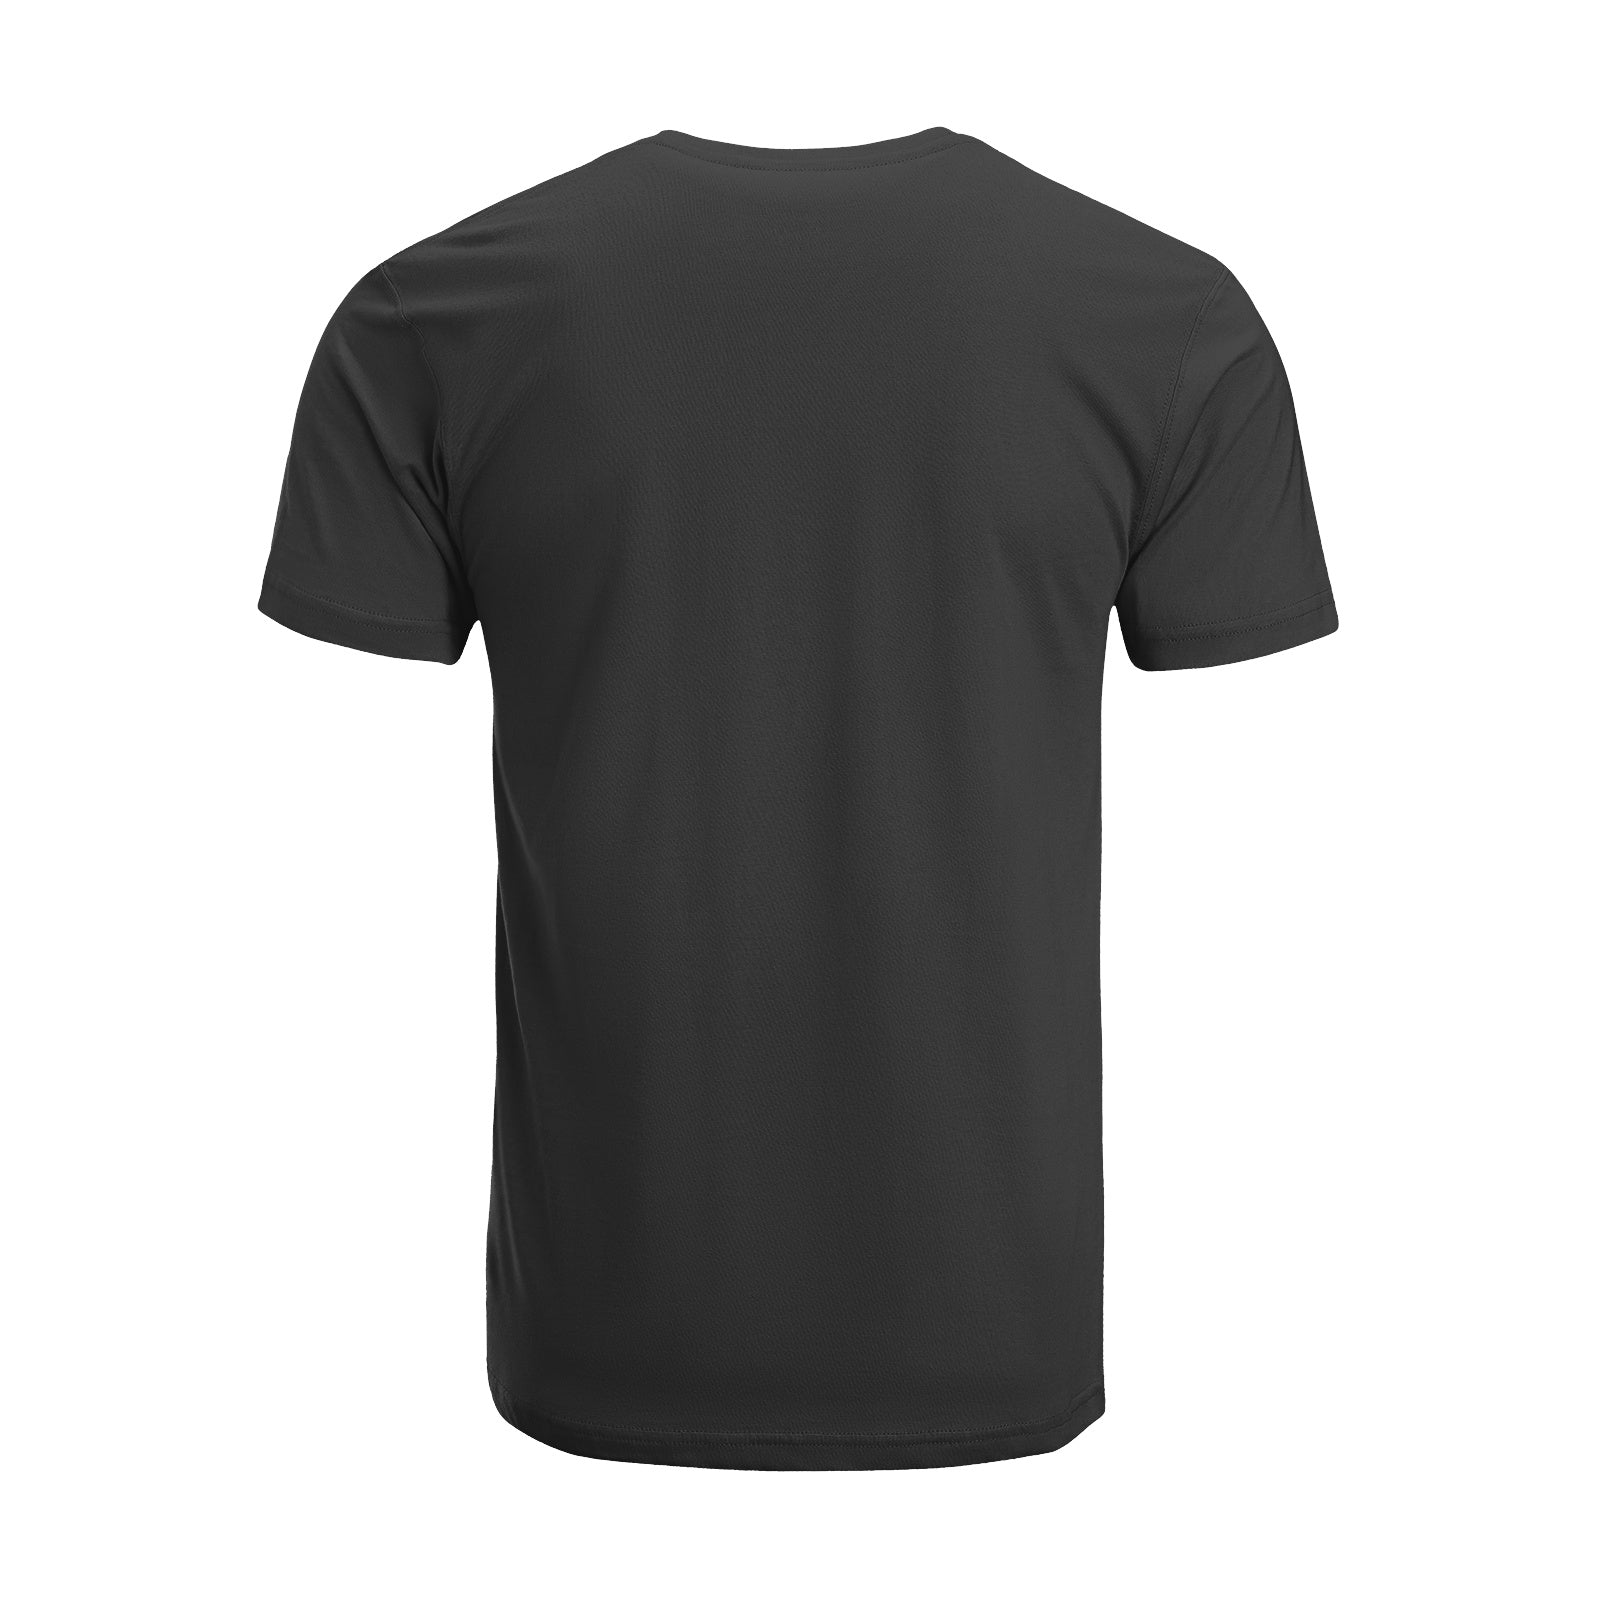 Unisex Short Sleeve Crew Neck Cotton Jersey T-Shirt Gym No. 16 - Tara-Outfits.com